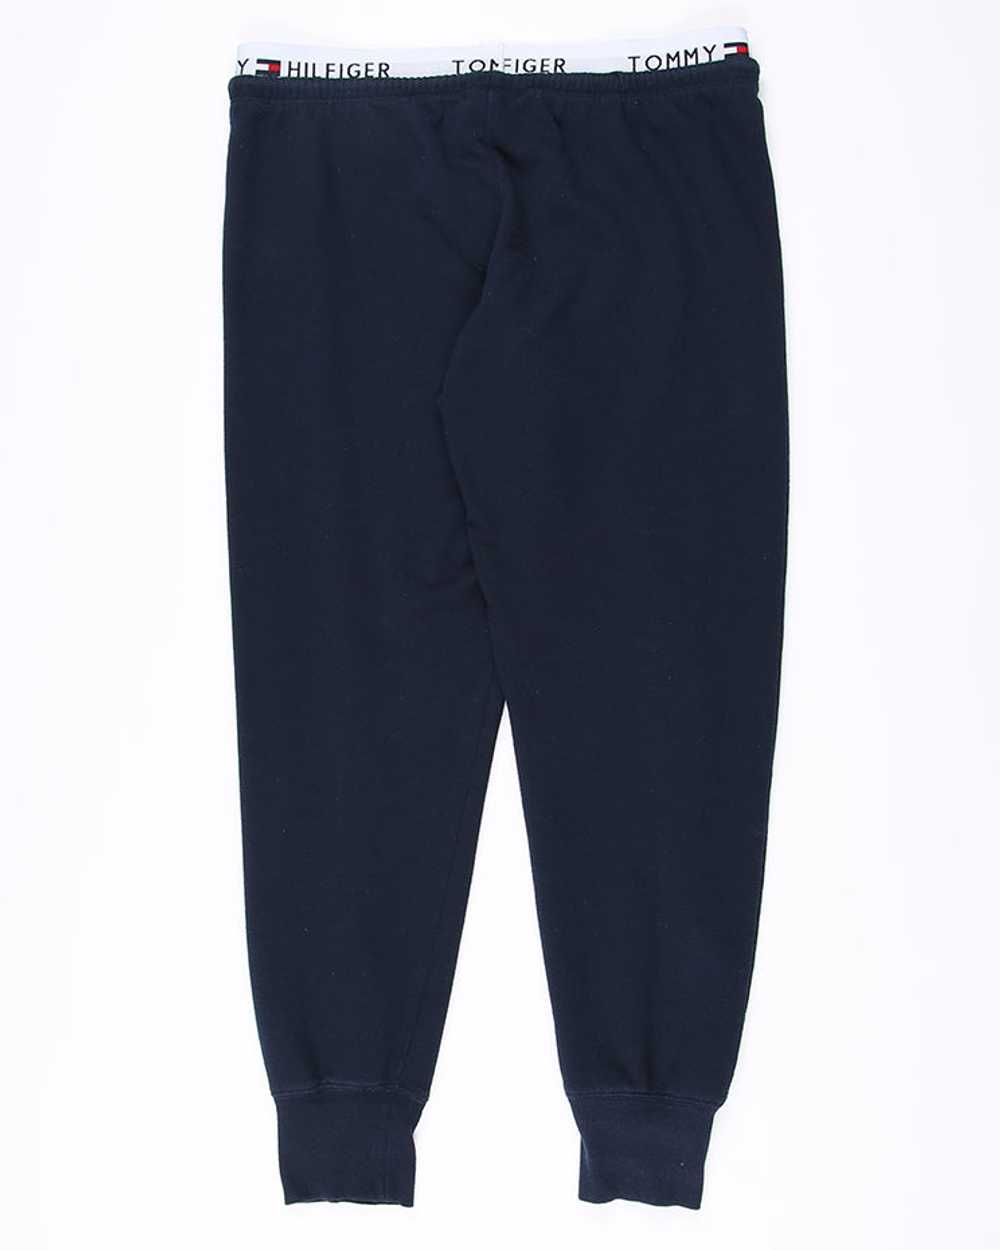 Vintage Tommy Hilfiger sweatpants - W30 L26 - image 3